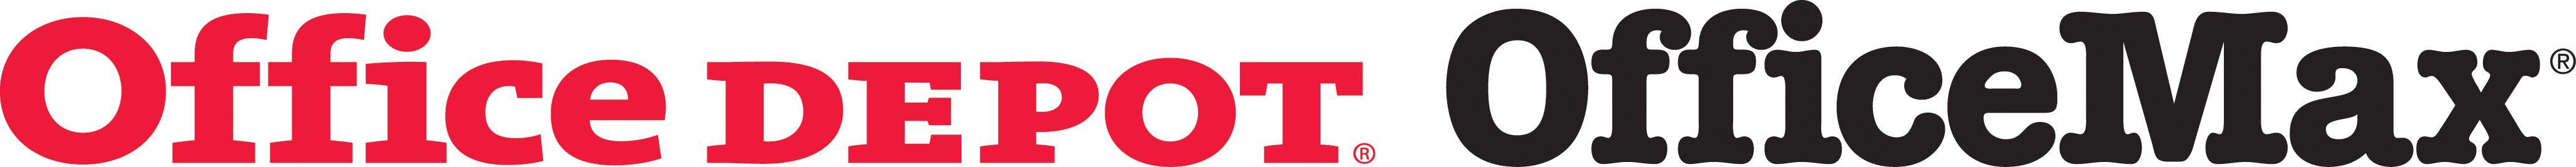 Office Depot Logo - Office Depot, Inc. Brings Innovation to Business Interior Design